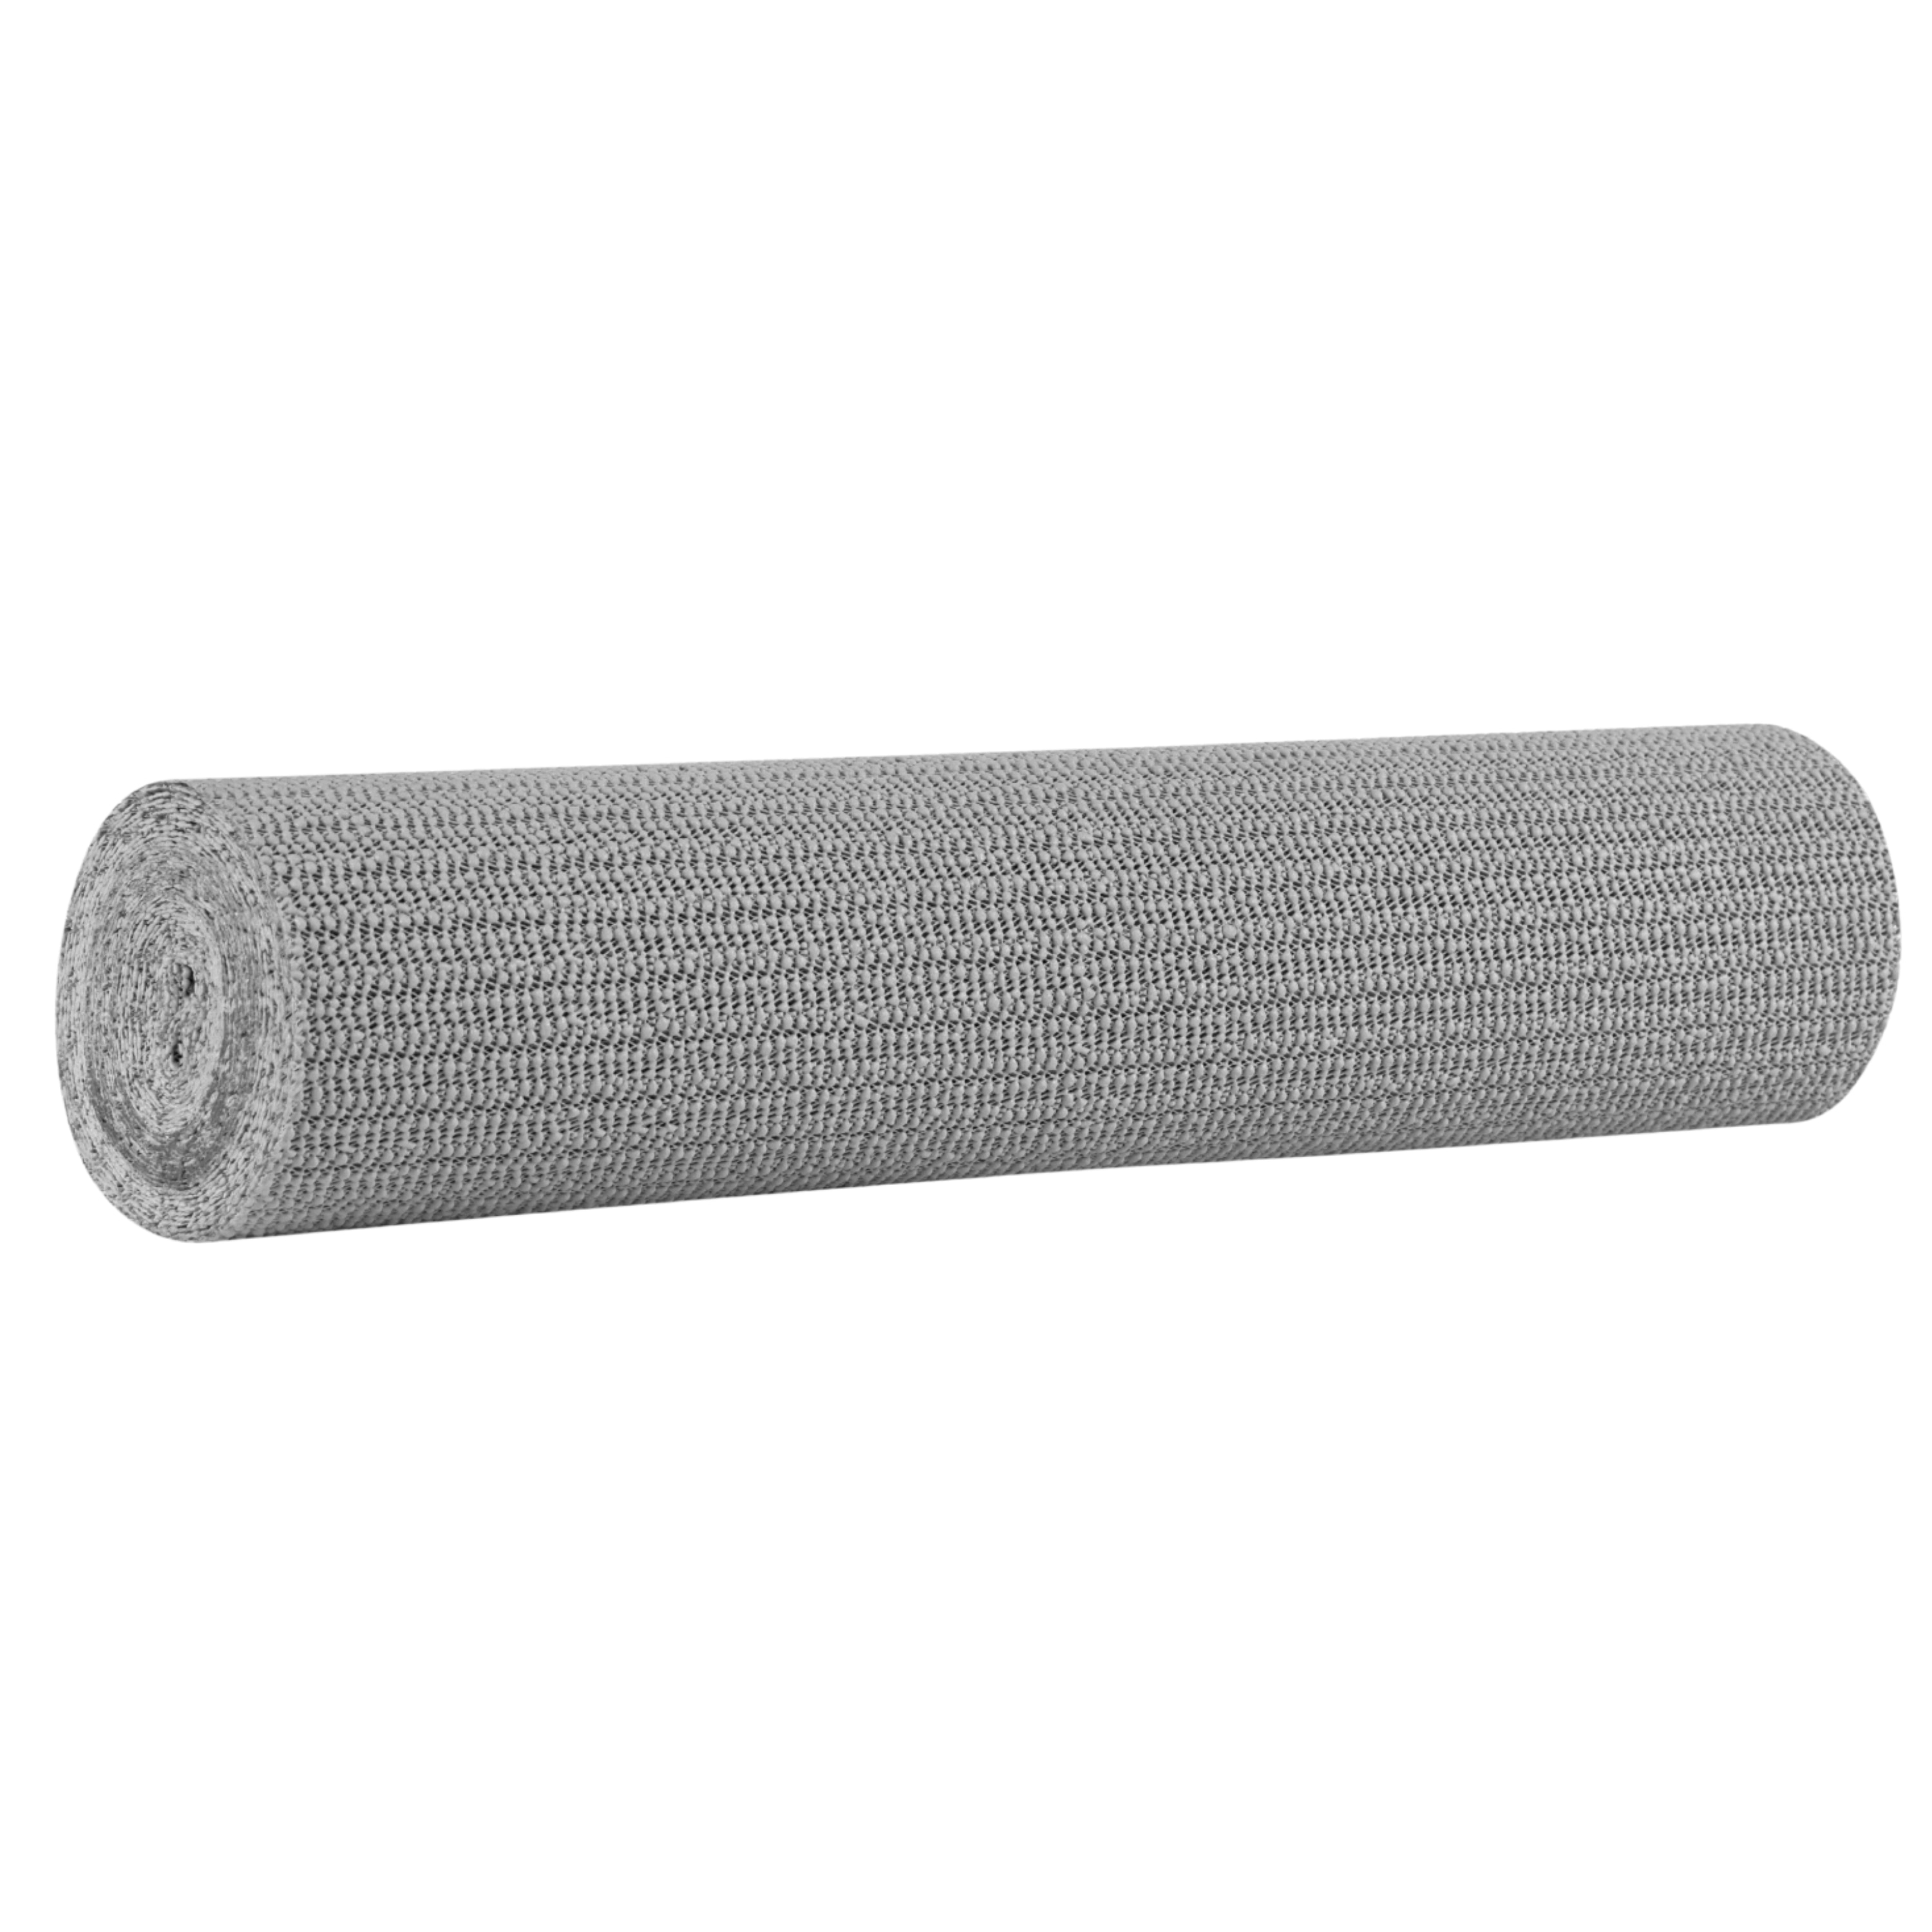 1 Grip Liner Foam Rubber Non Slip Drawer Shelf Mat Roll Lining Tool Box Pad 5ft